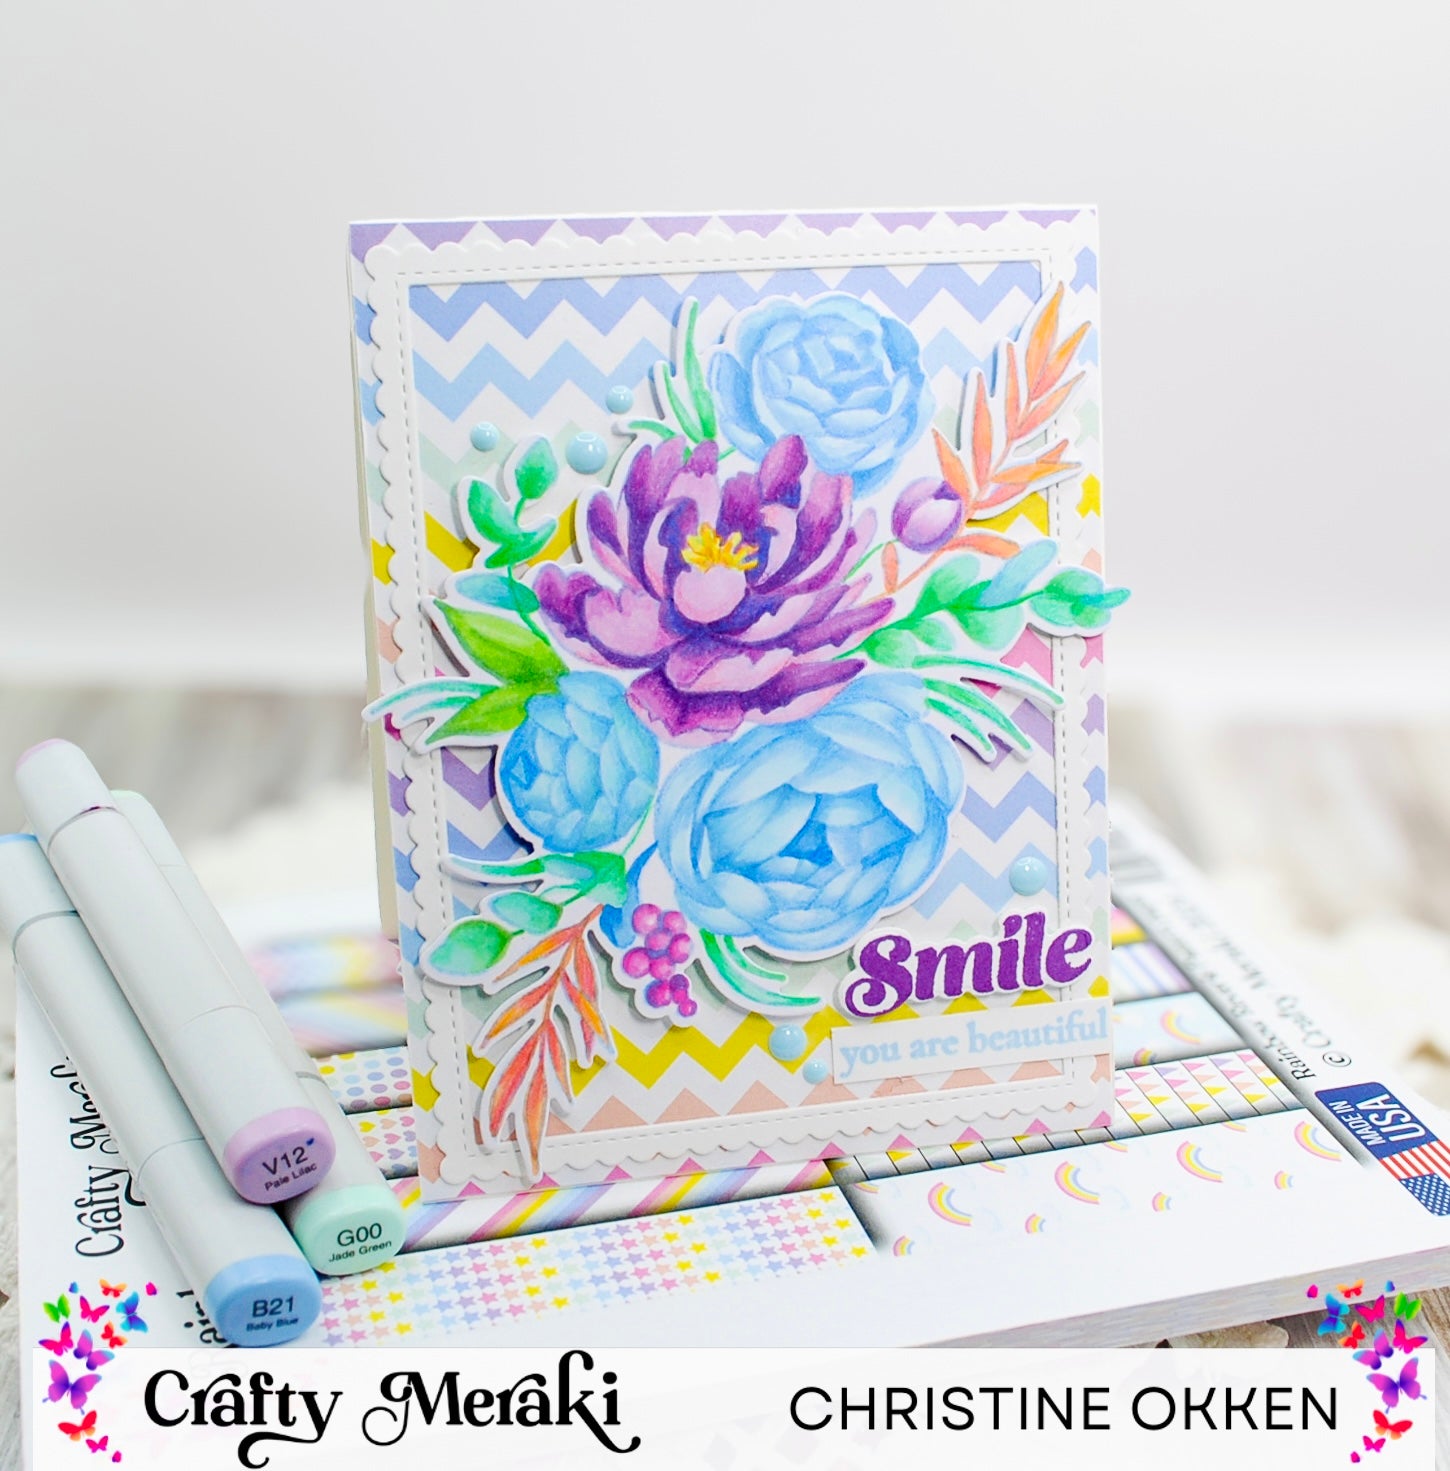 Crafty Meraki Rainbow Reverie Paper Pack